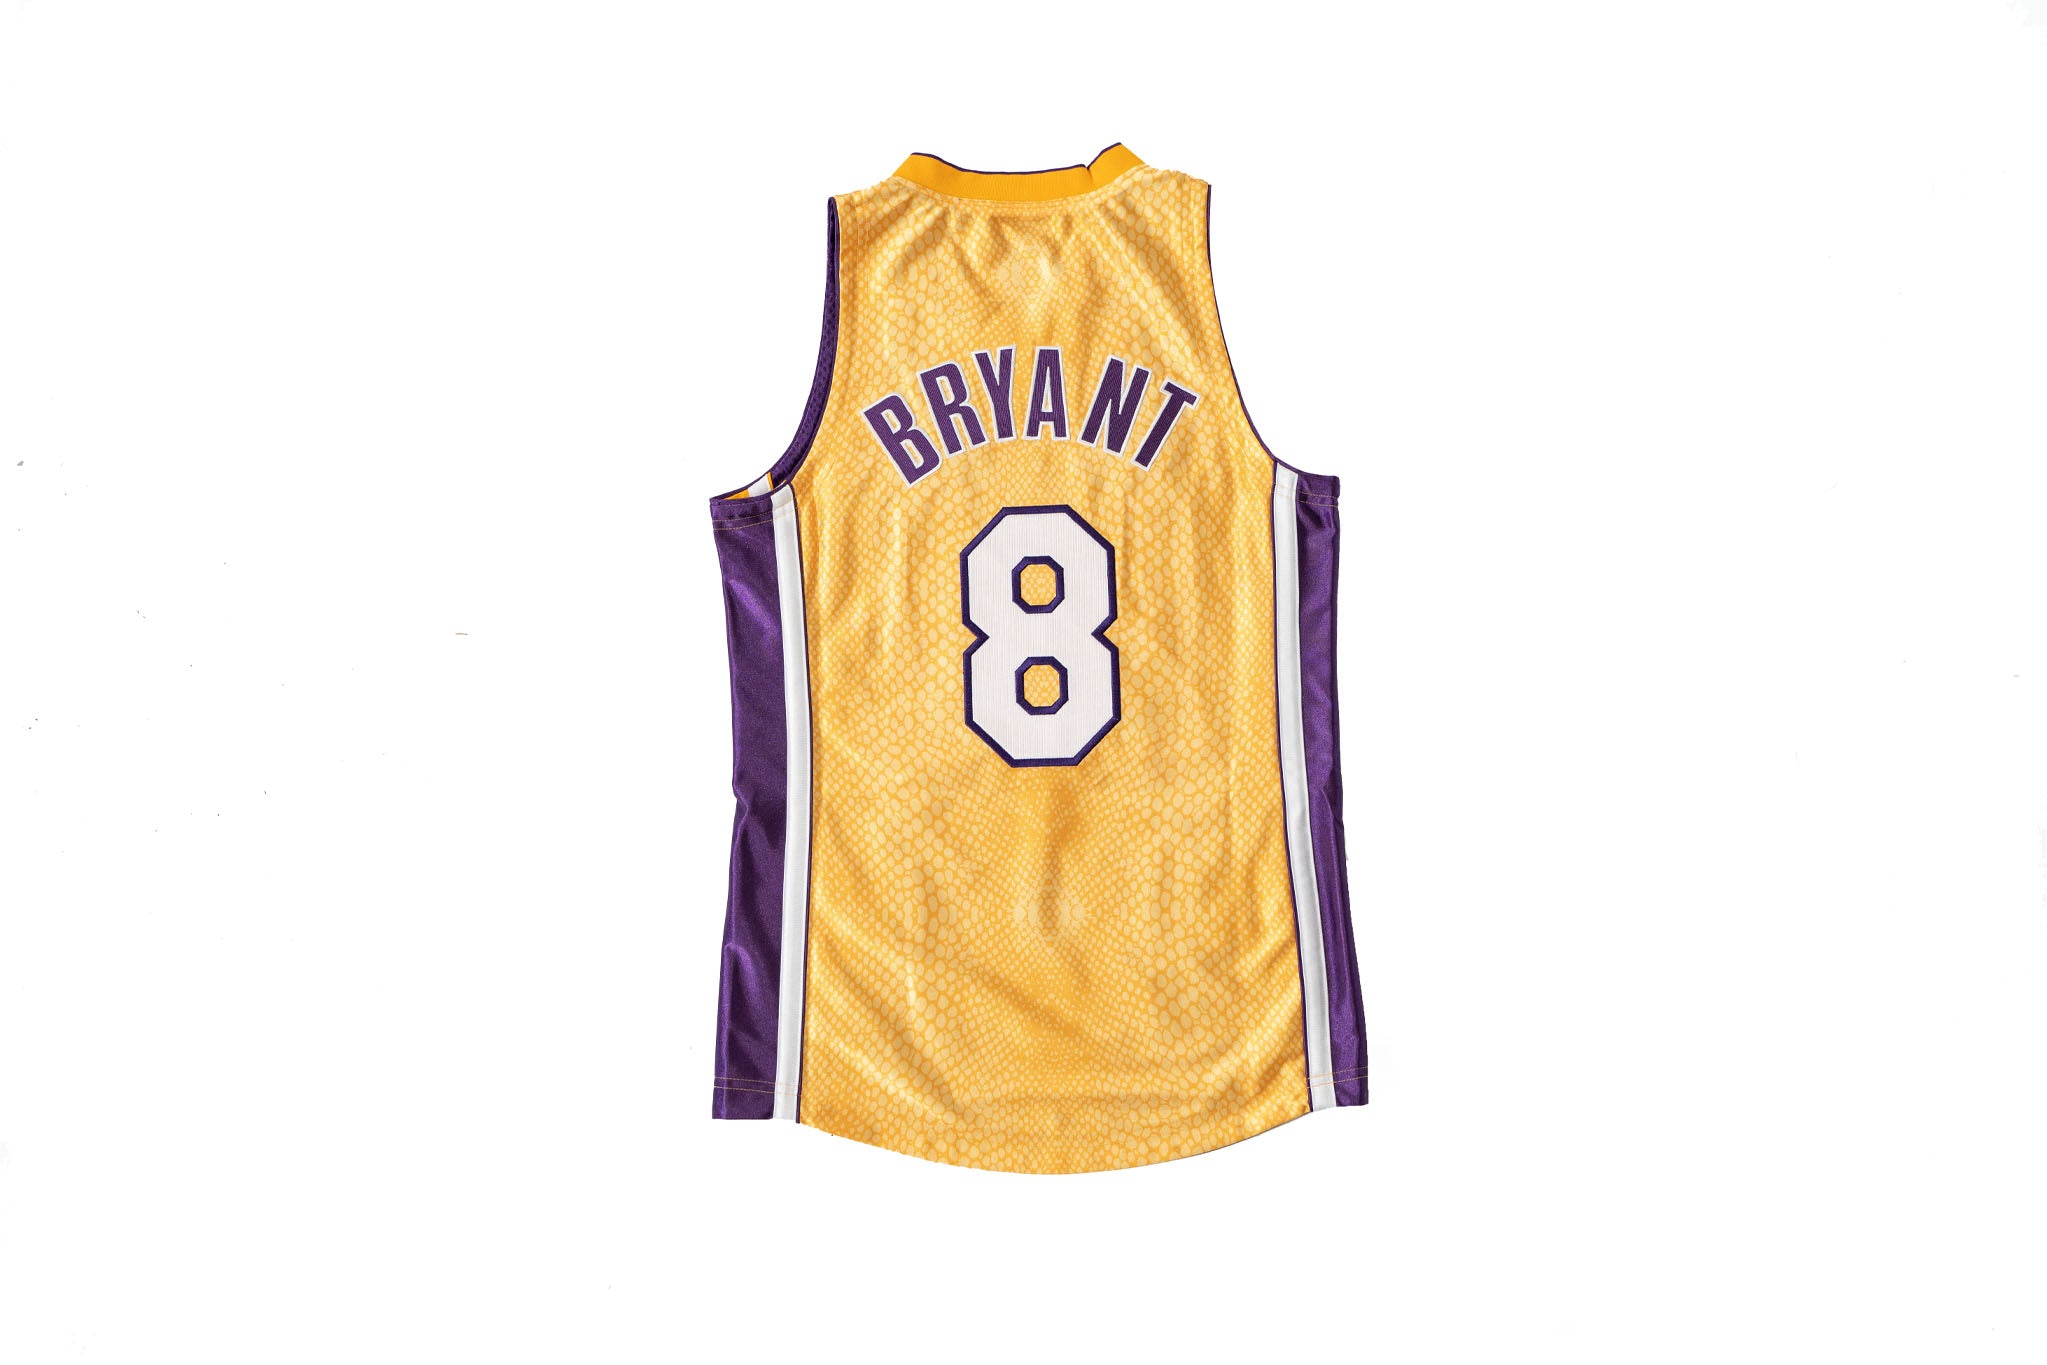 Lebron James LA Lakers Jordan Authentic Jersey - SoleFly